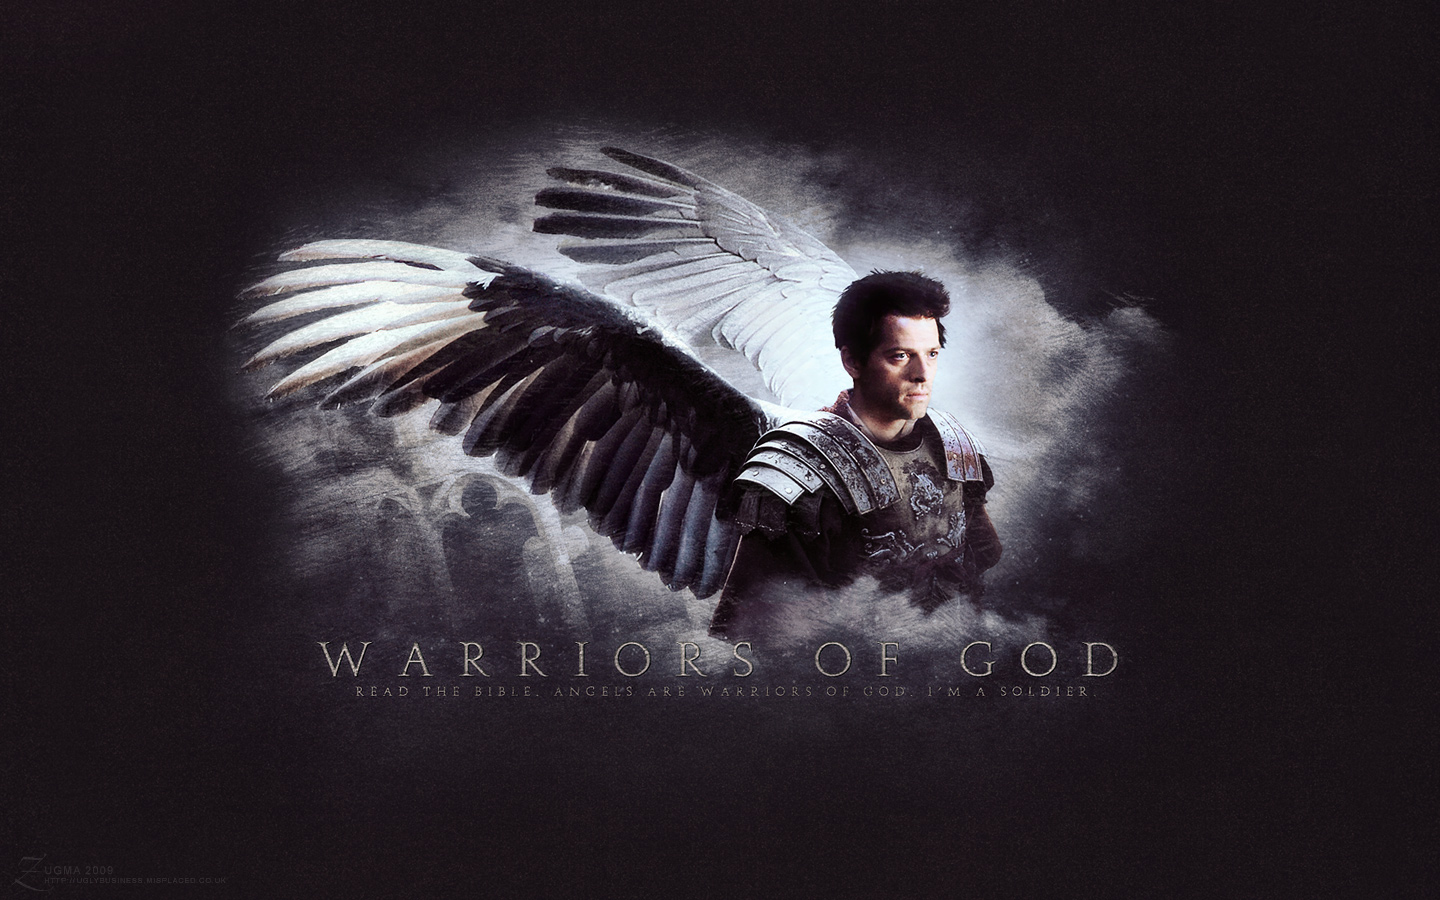 Castiel, warrior of God - LOVE ANGELS Wallpaper (30164465) - Fanpop